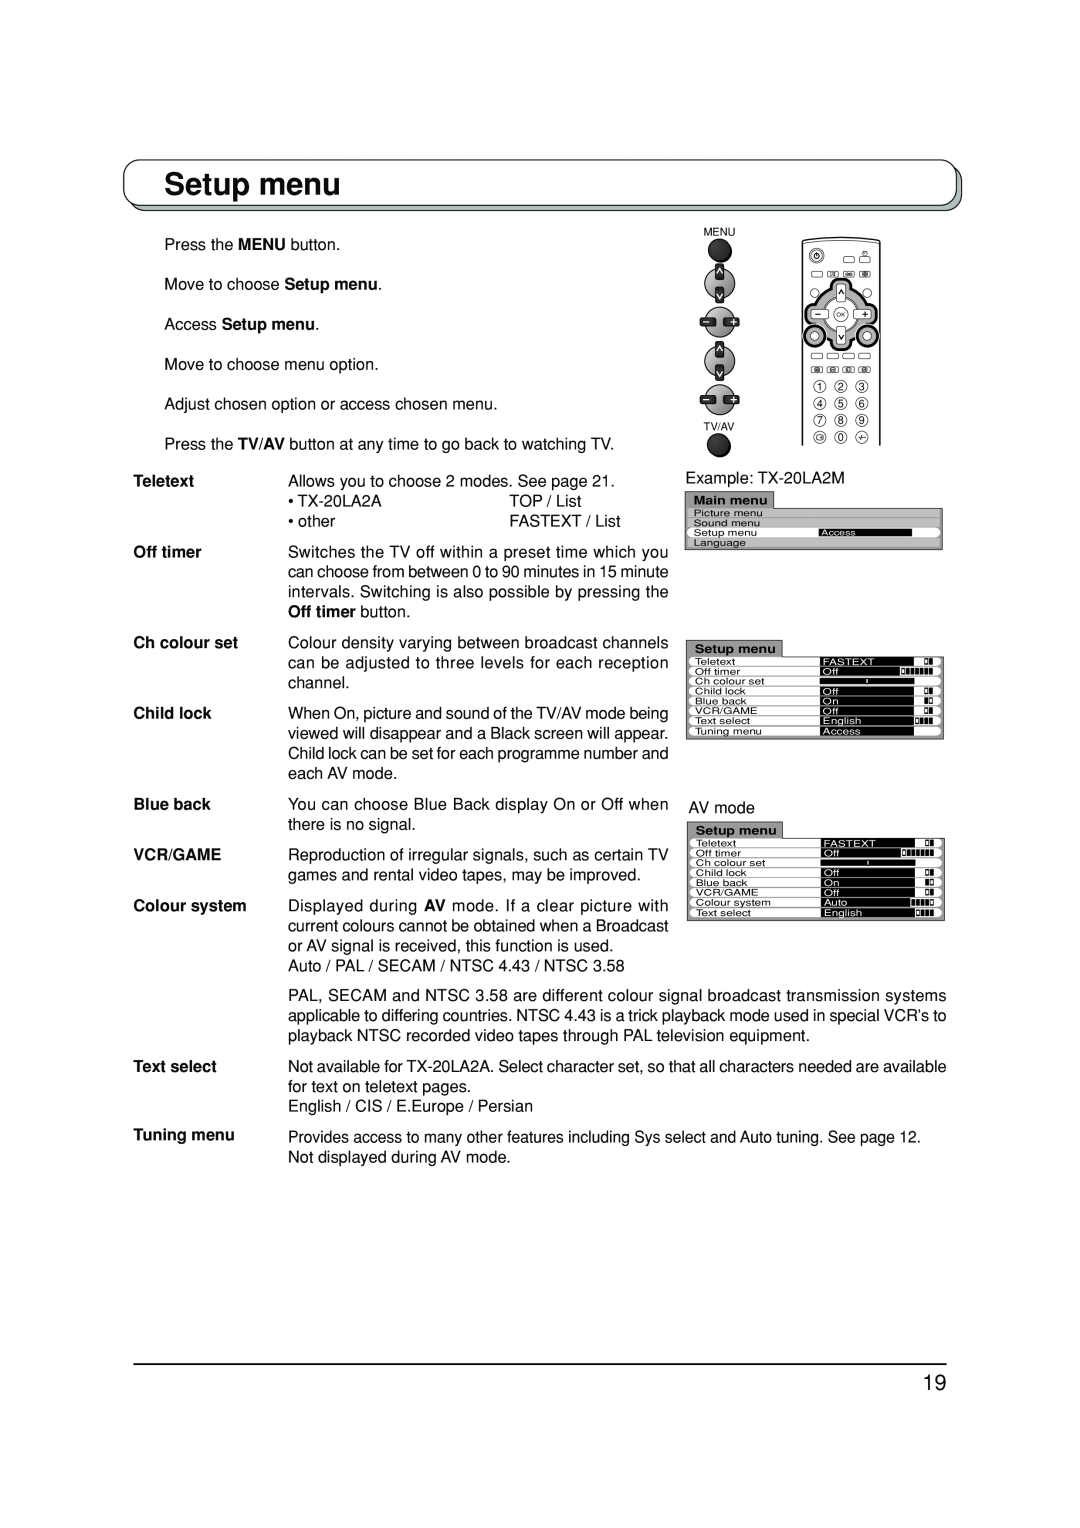 Panasonic TX-20LA2X manual Access Setup menu, Teletext, Off timer, Ch colour set, Child lock, Text select Tuning menu 